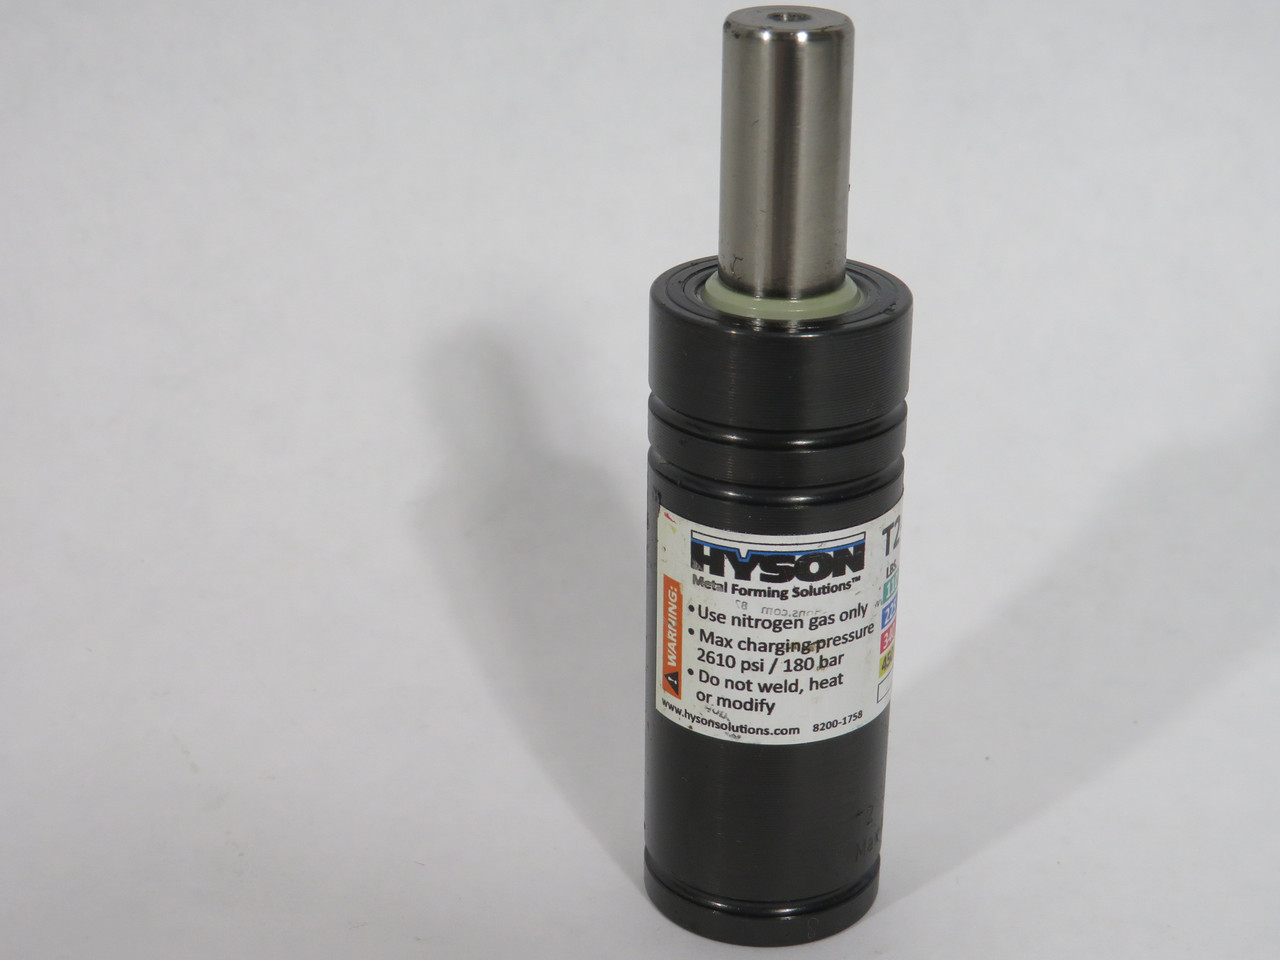 Hyson T2-180-25 Mini Nitrogen Gas Spring 450lbs-2610psi 25mm Stroke USED